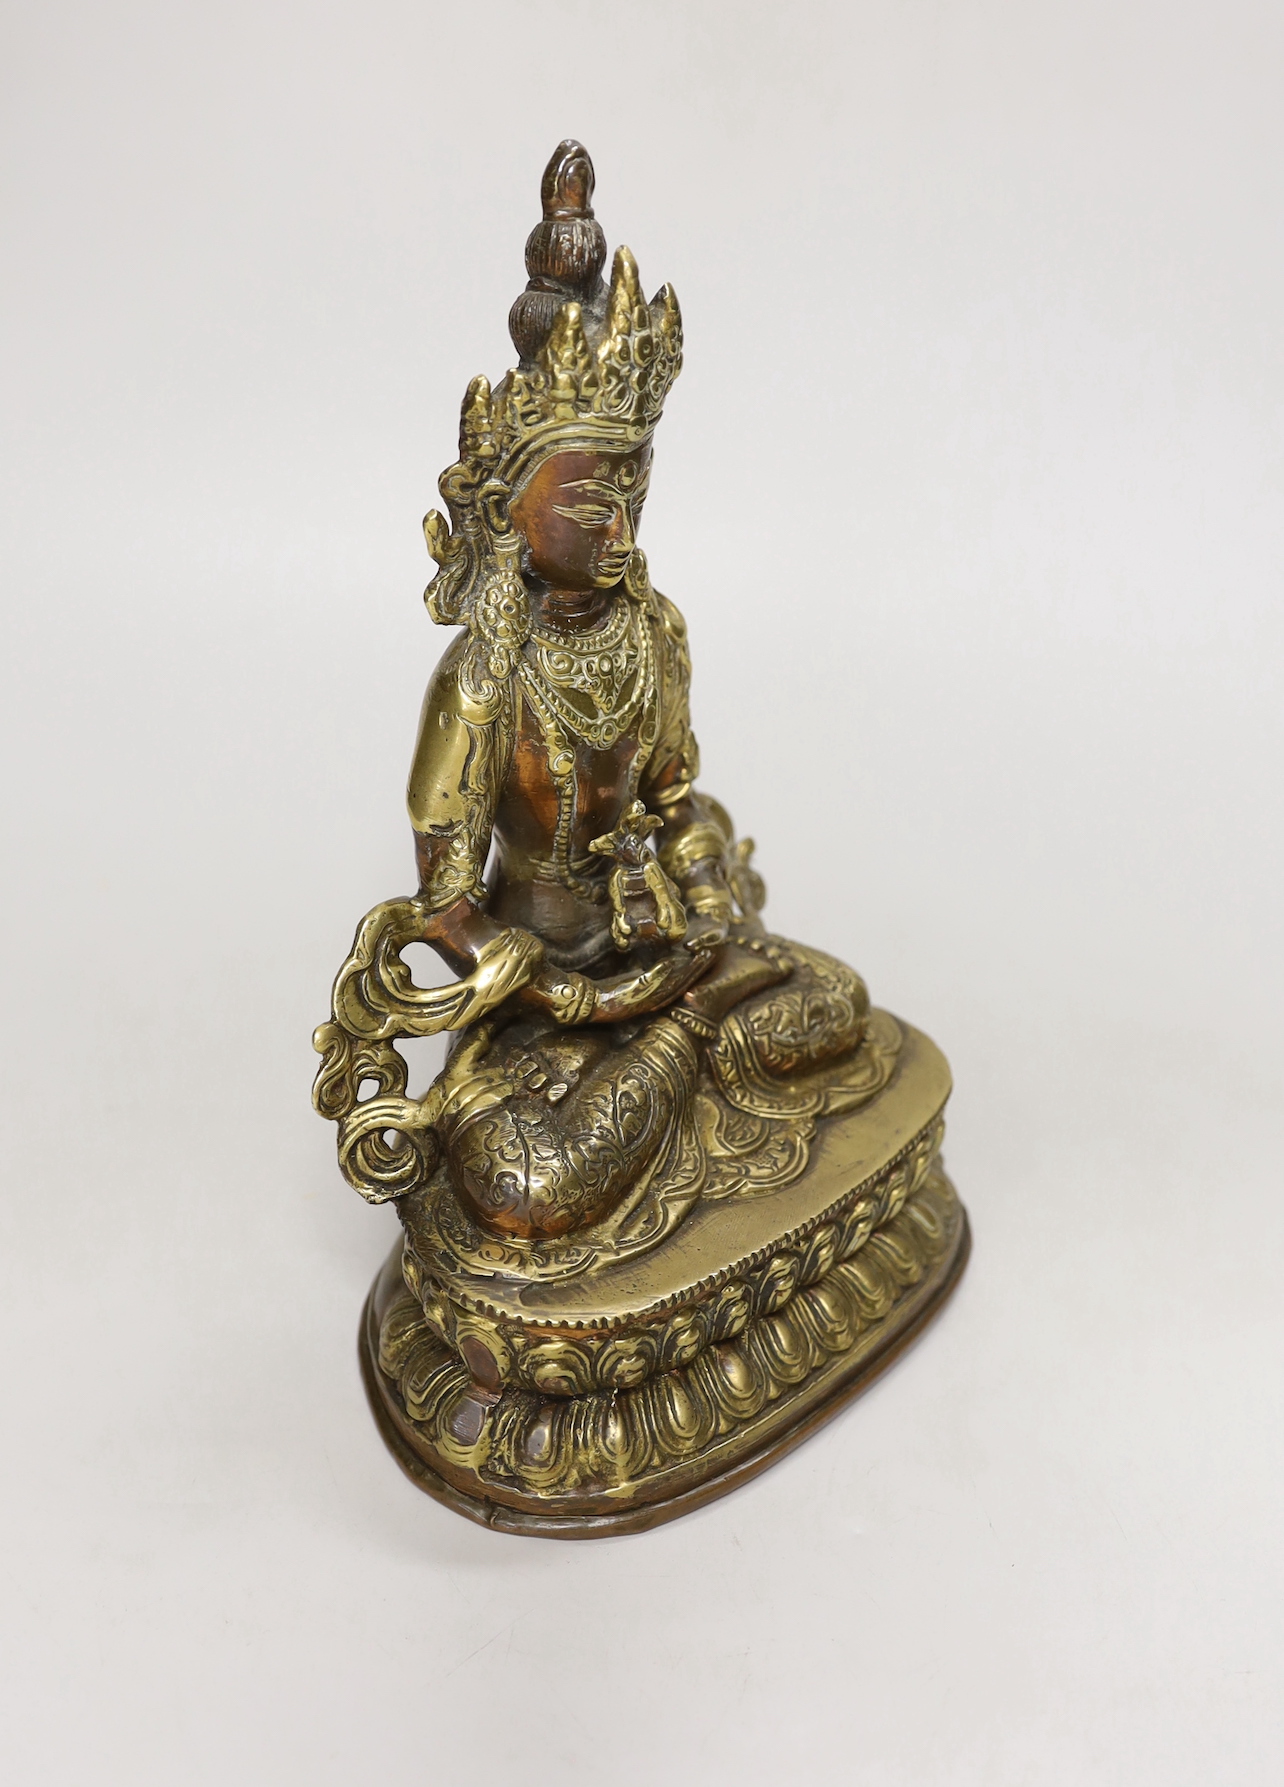 A Buddhist gilt copper alloy figure of a Bodhisattva, 22cm high